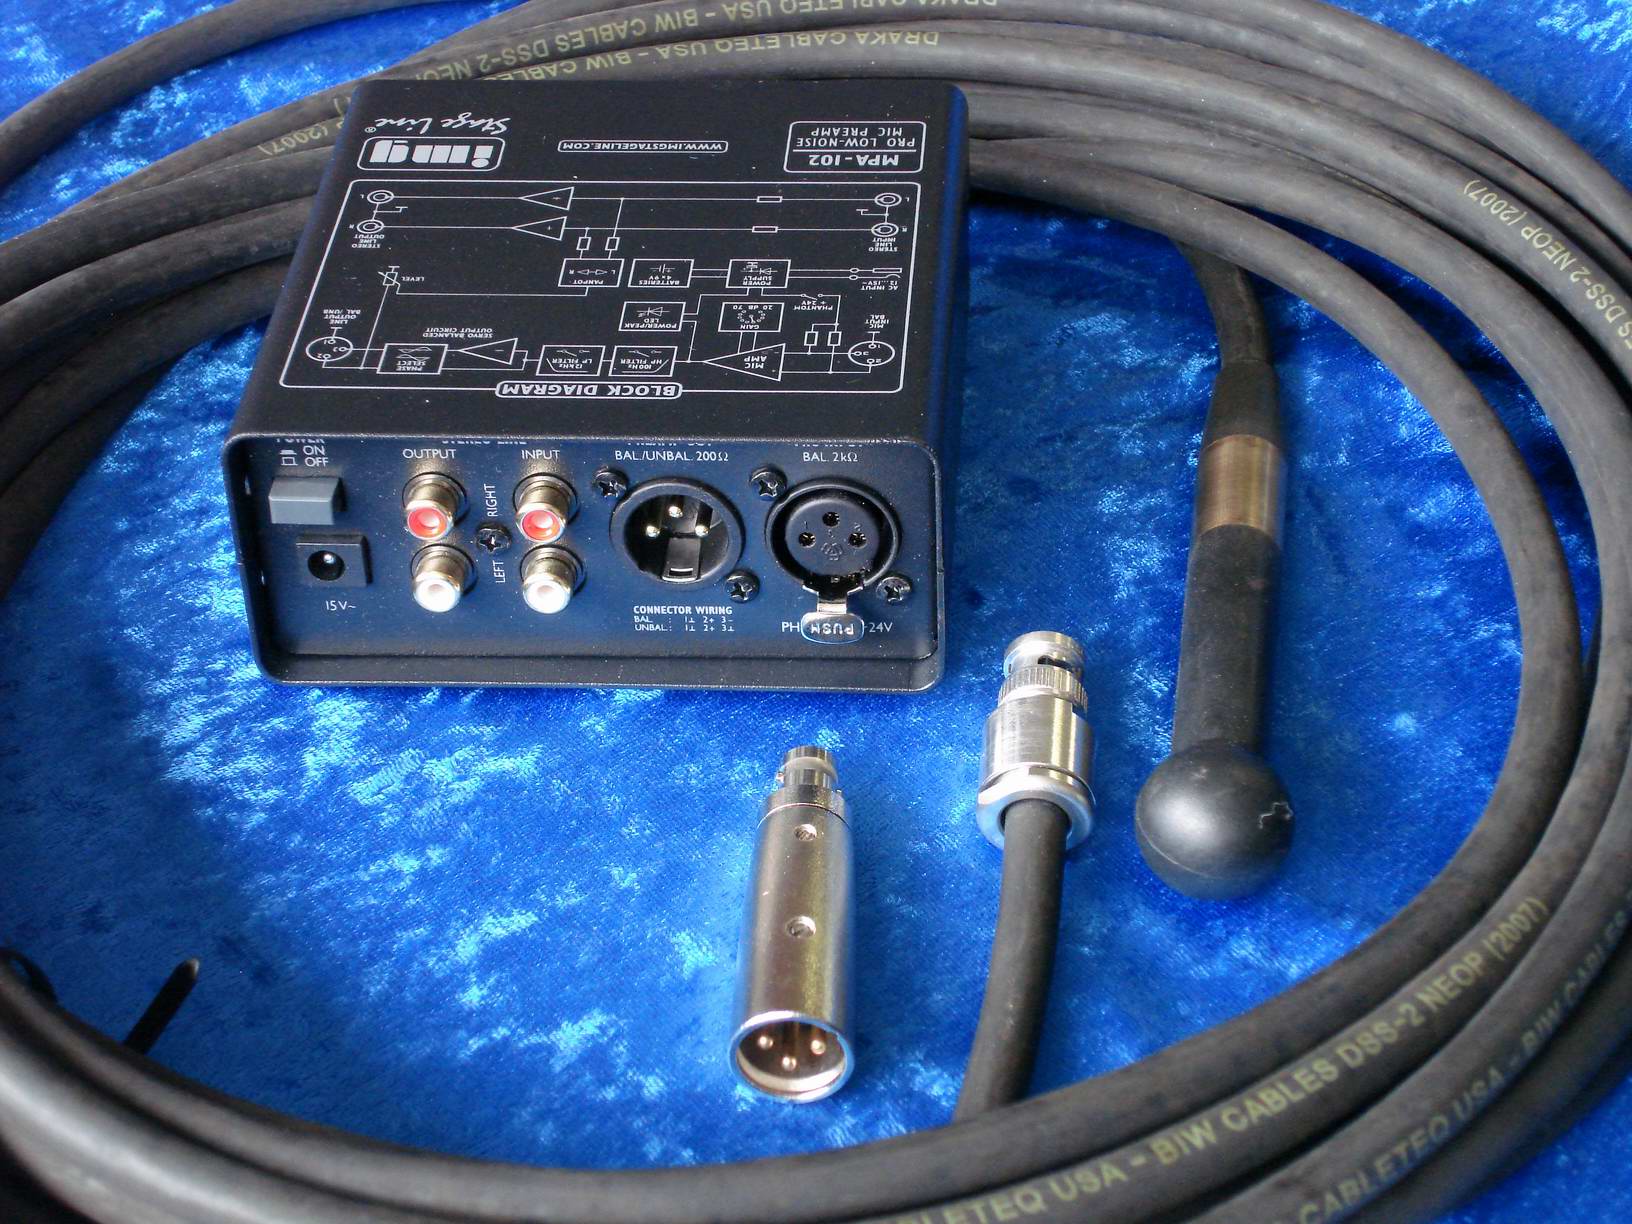 Etec Hydrophone amplifiers, acoustic Pinger detection, hydrophones,  electronic custom design, ortofon vintage gear